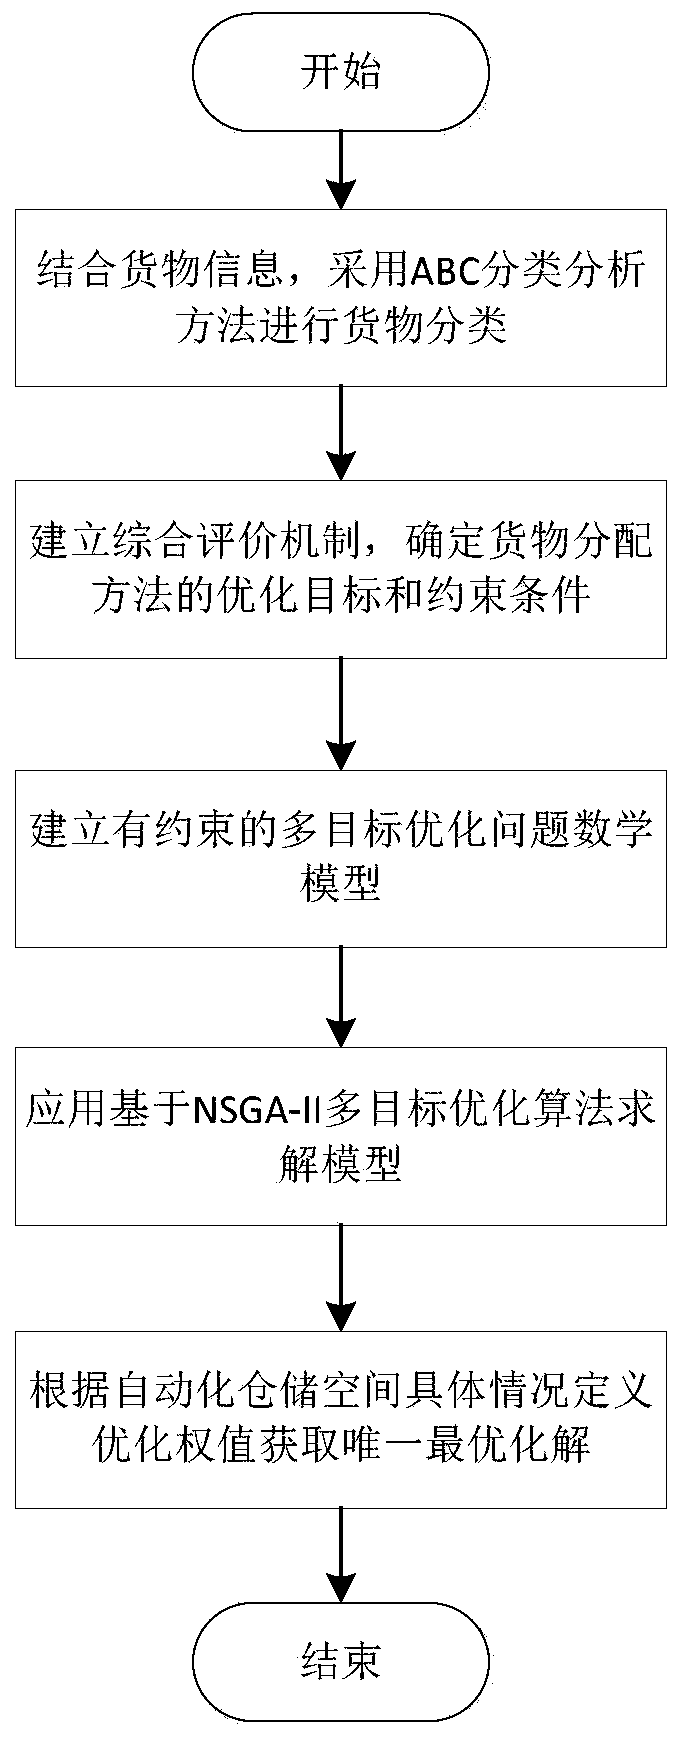 NSGA-II-based automatic storage goods allocation optimization method